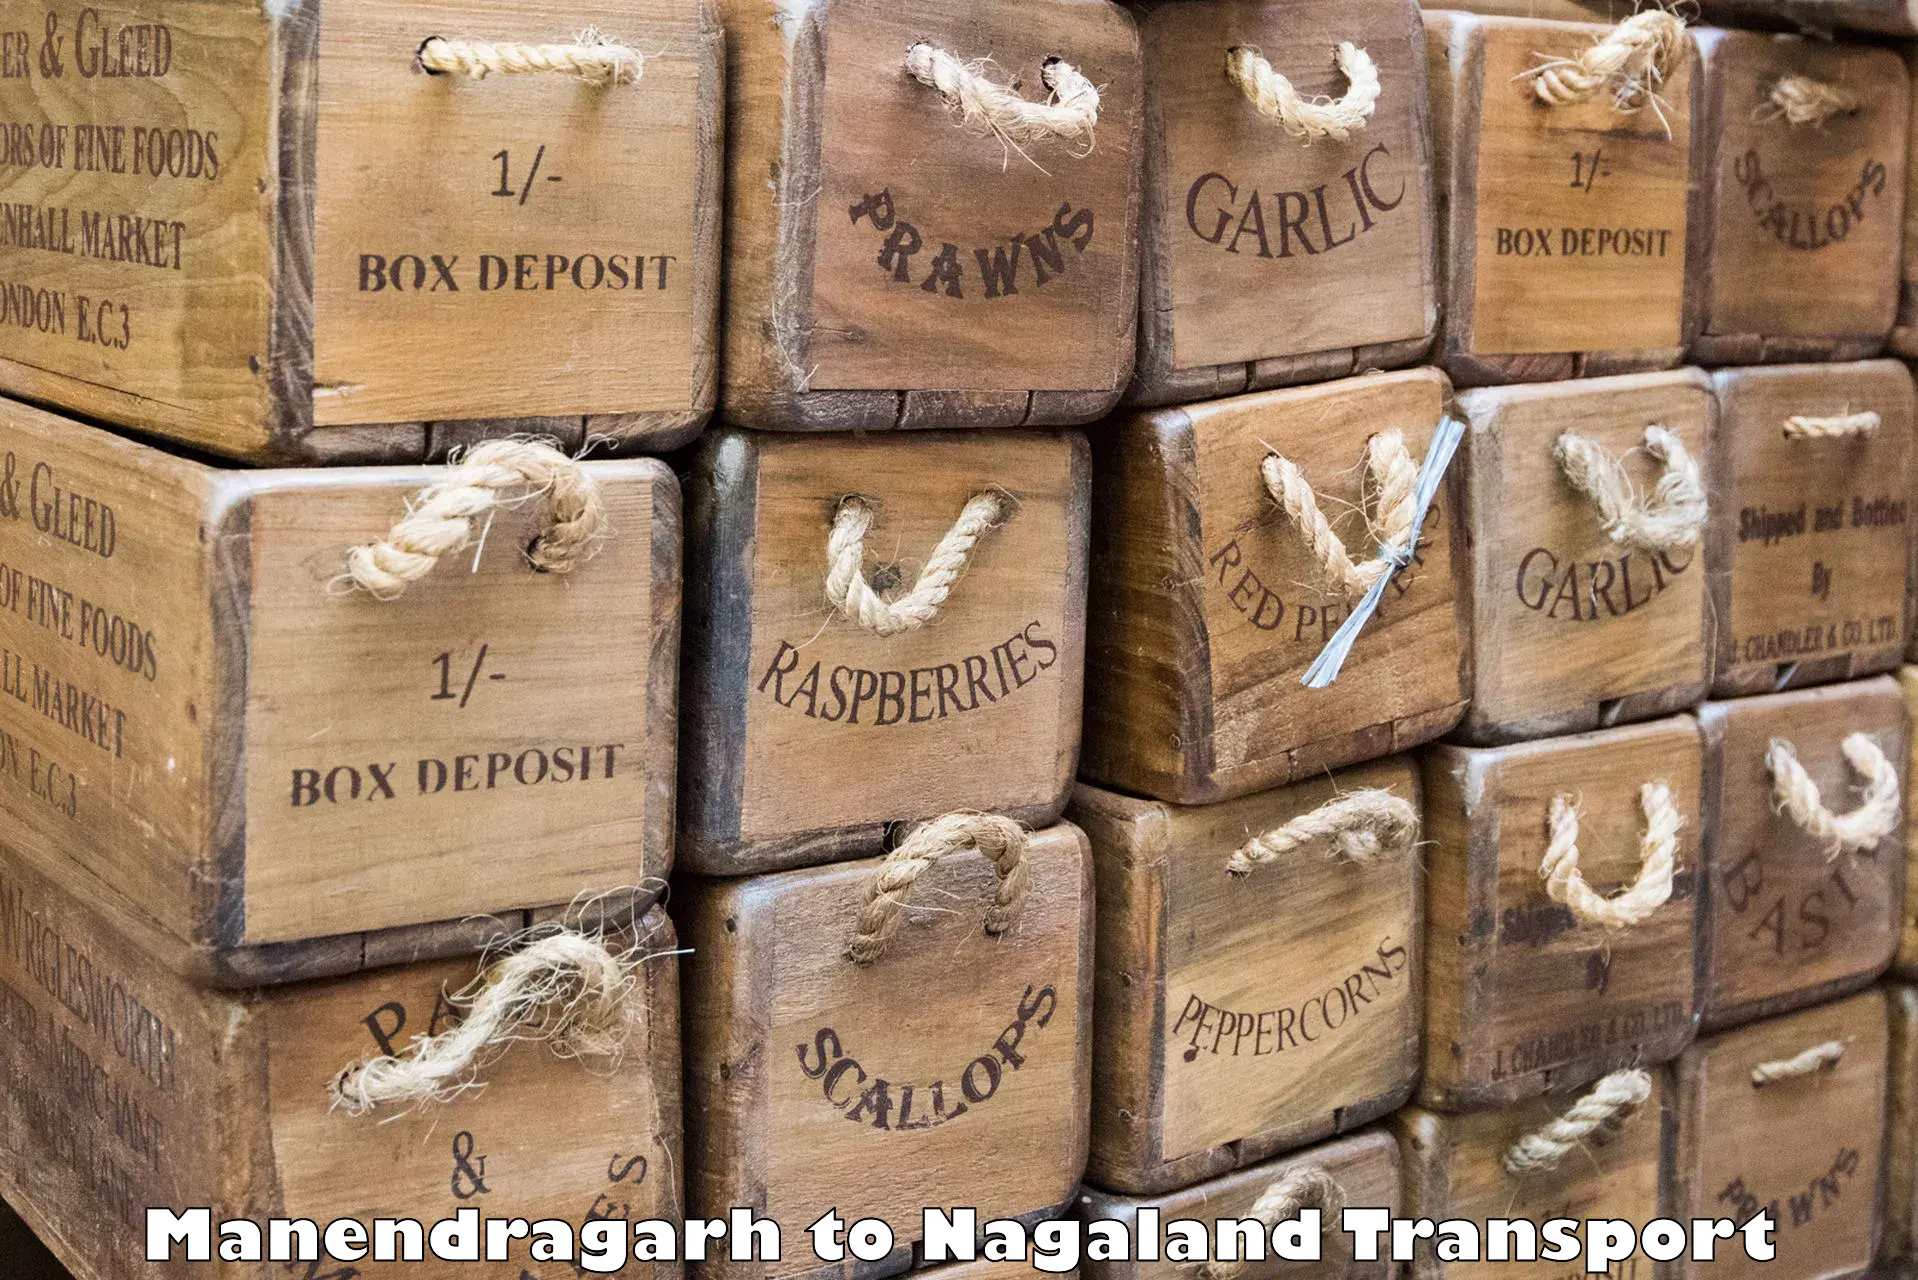 Container transport service Manendragarh to Dimapur